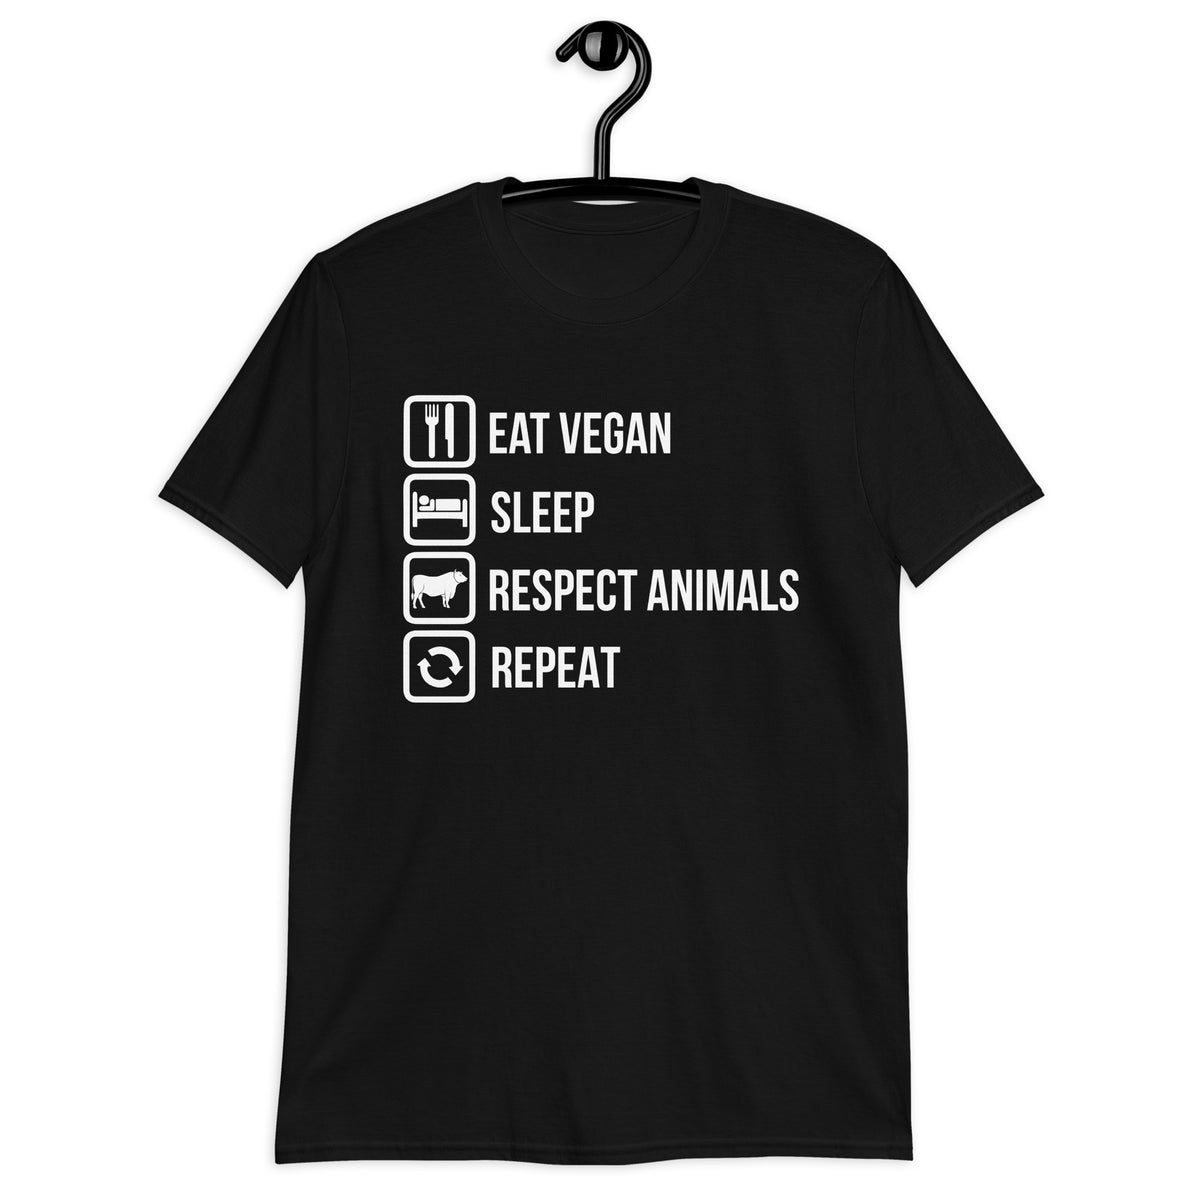 EAT VEGAN RESPECT ANIMALS REPEAT shirt sleeved T-Shirt